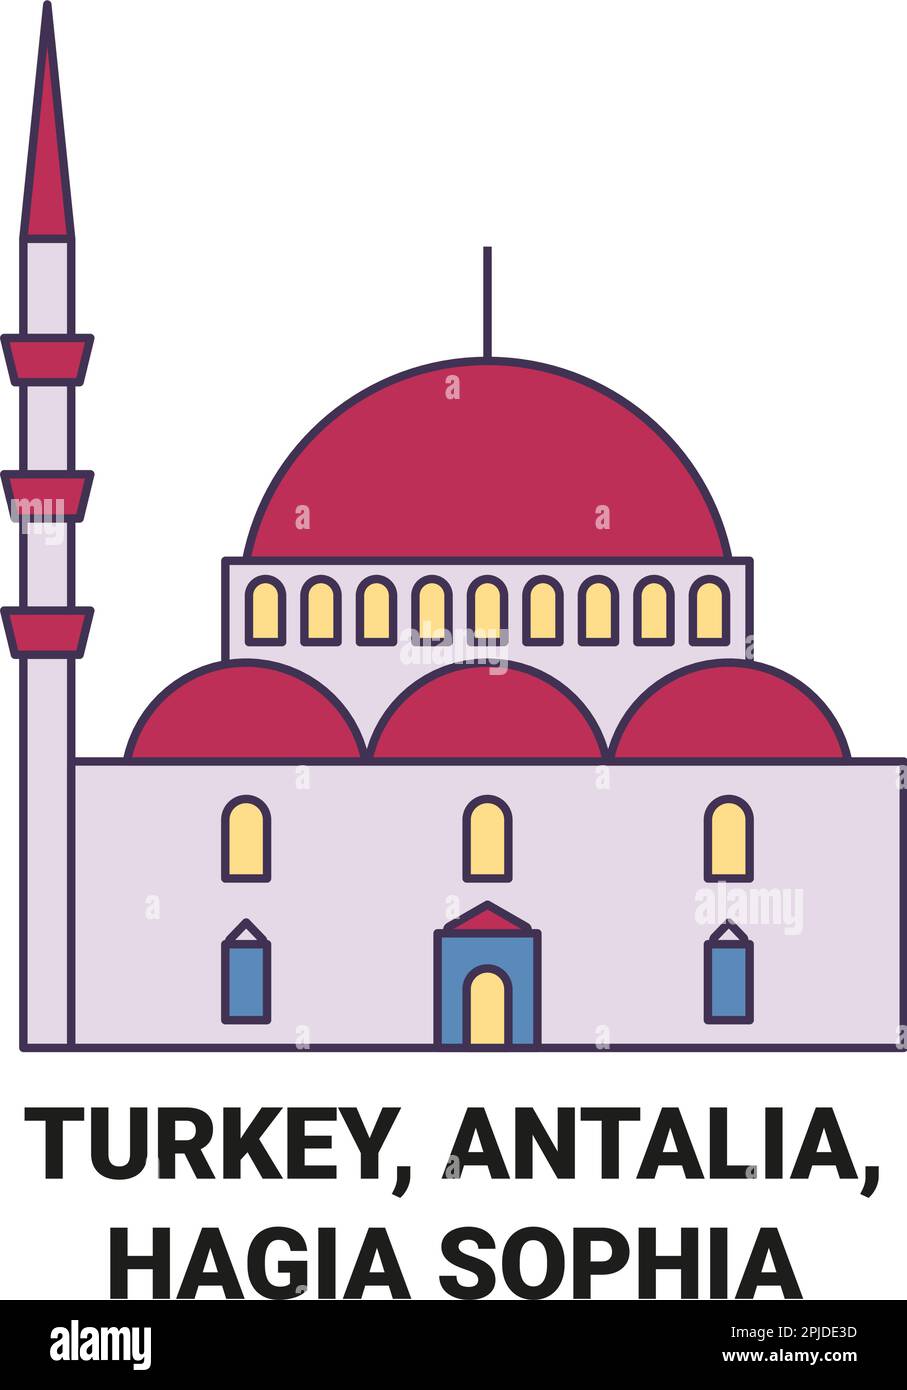 Turkey, Antalia, Hagia Sophia travel landmark vector illustration Stock Vector